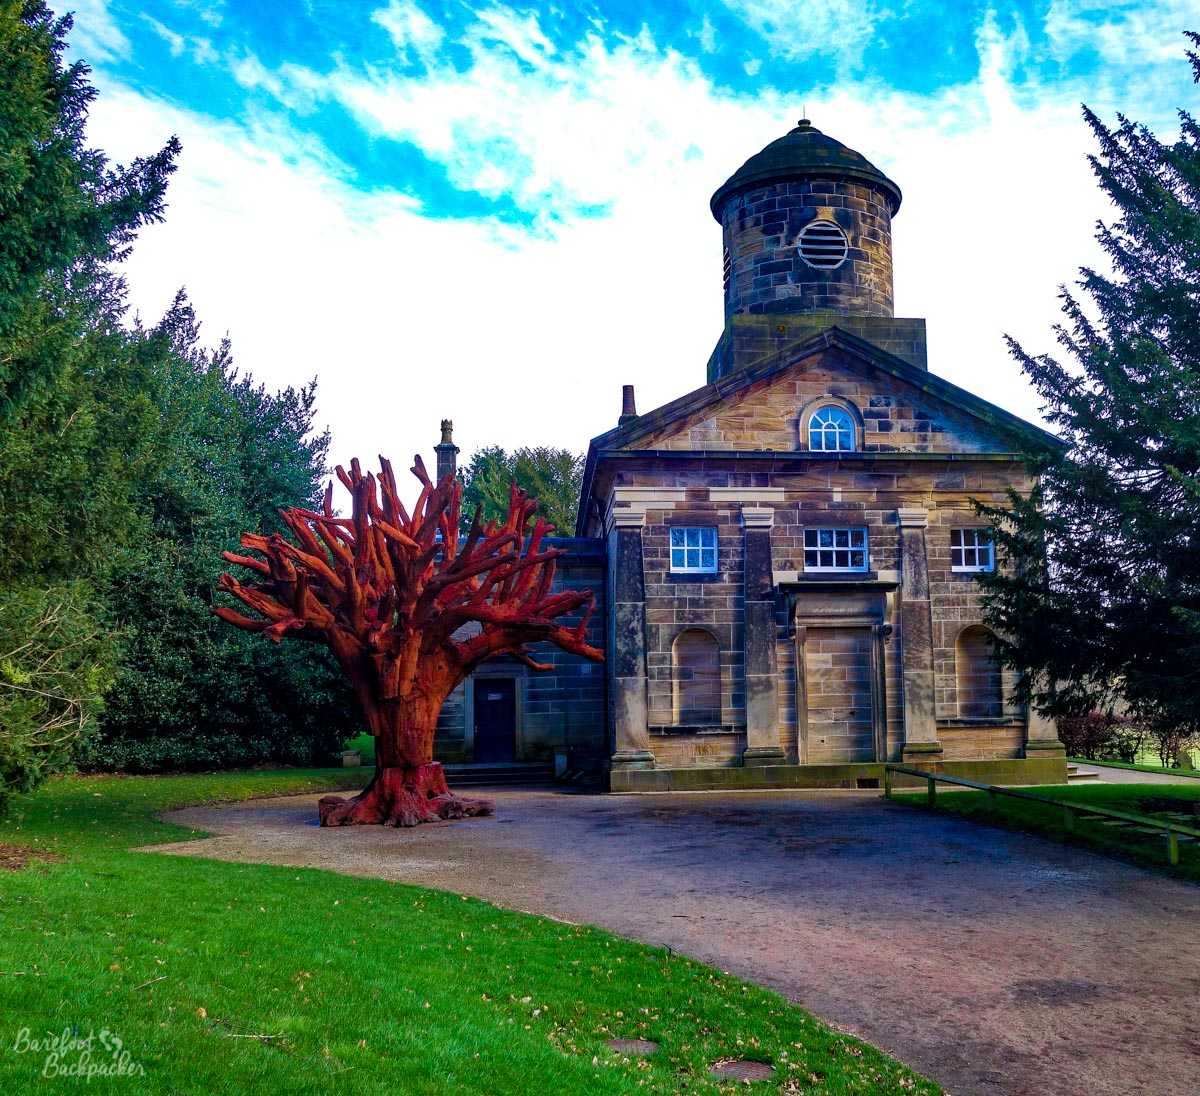 St Bartholomew's Chapel and Iron Tree, Yorkshire Sculpture Park